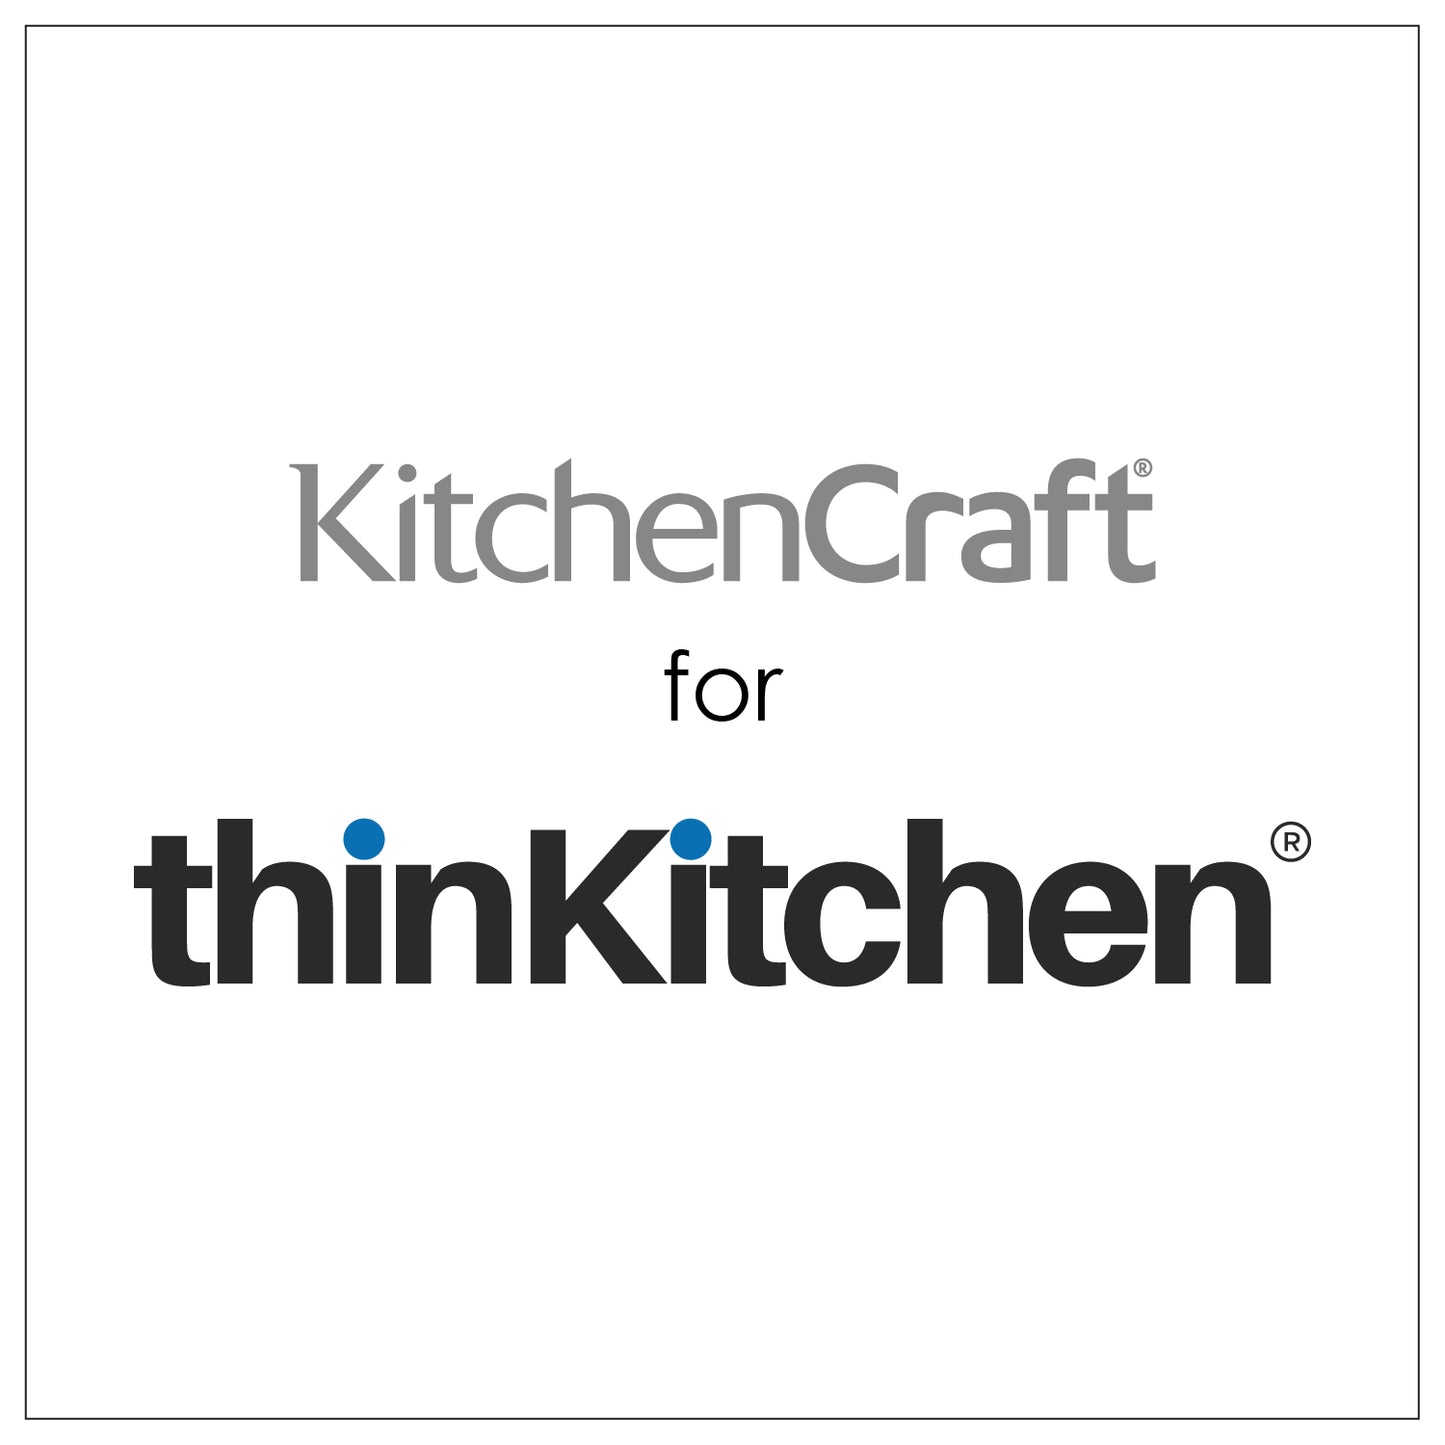 KitchenCraft Blue Stoneware Coupe 22cm Bowl Set, Set of 4